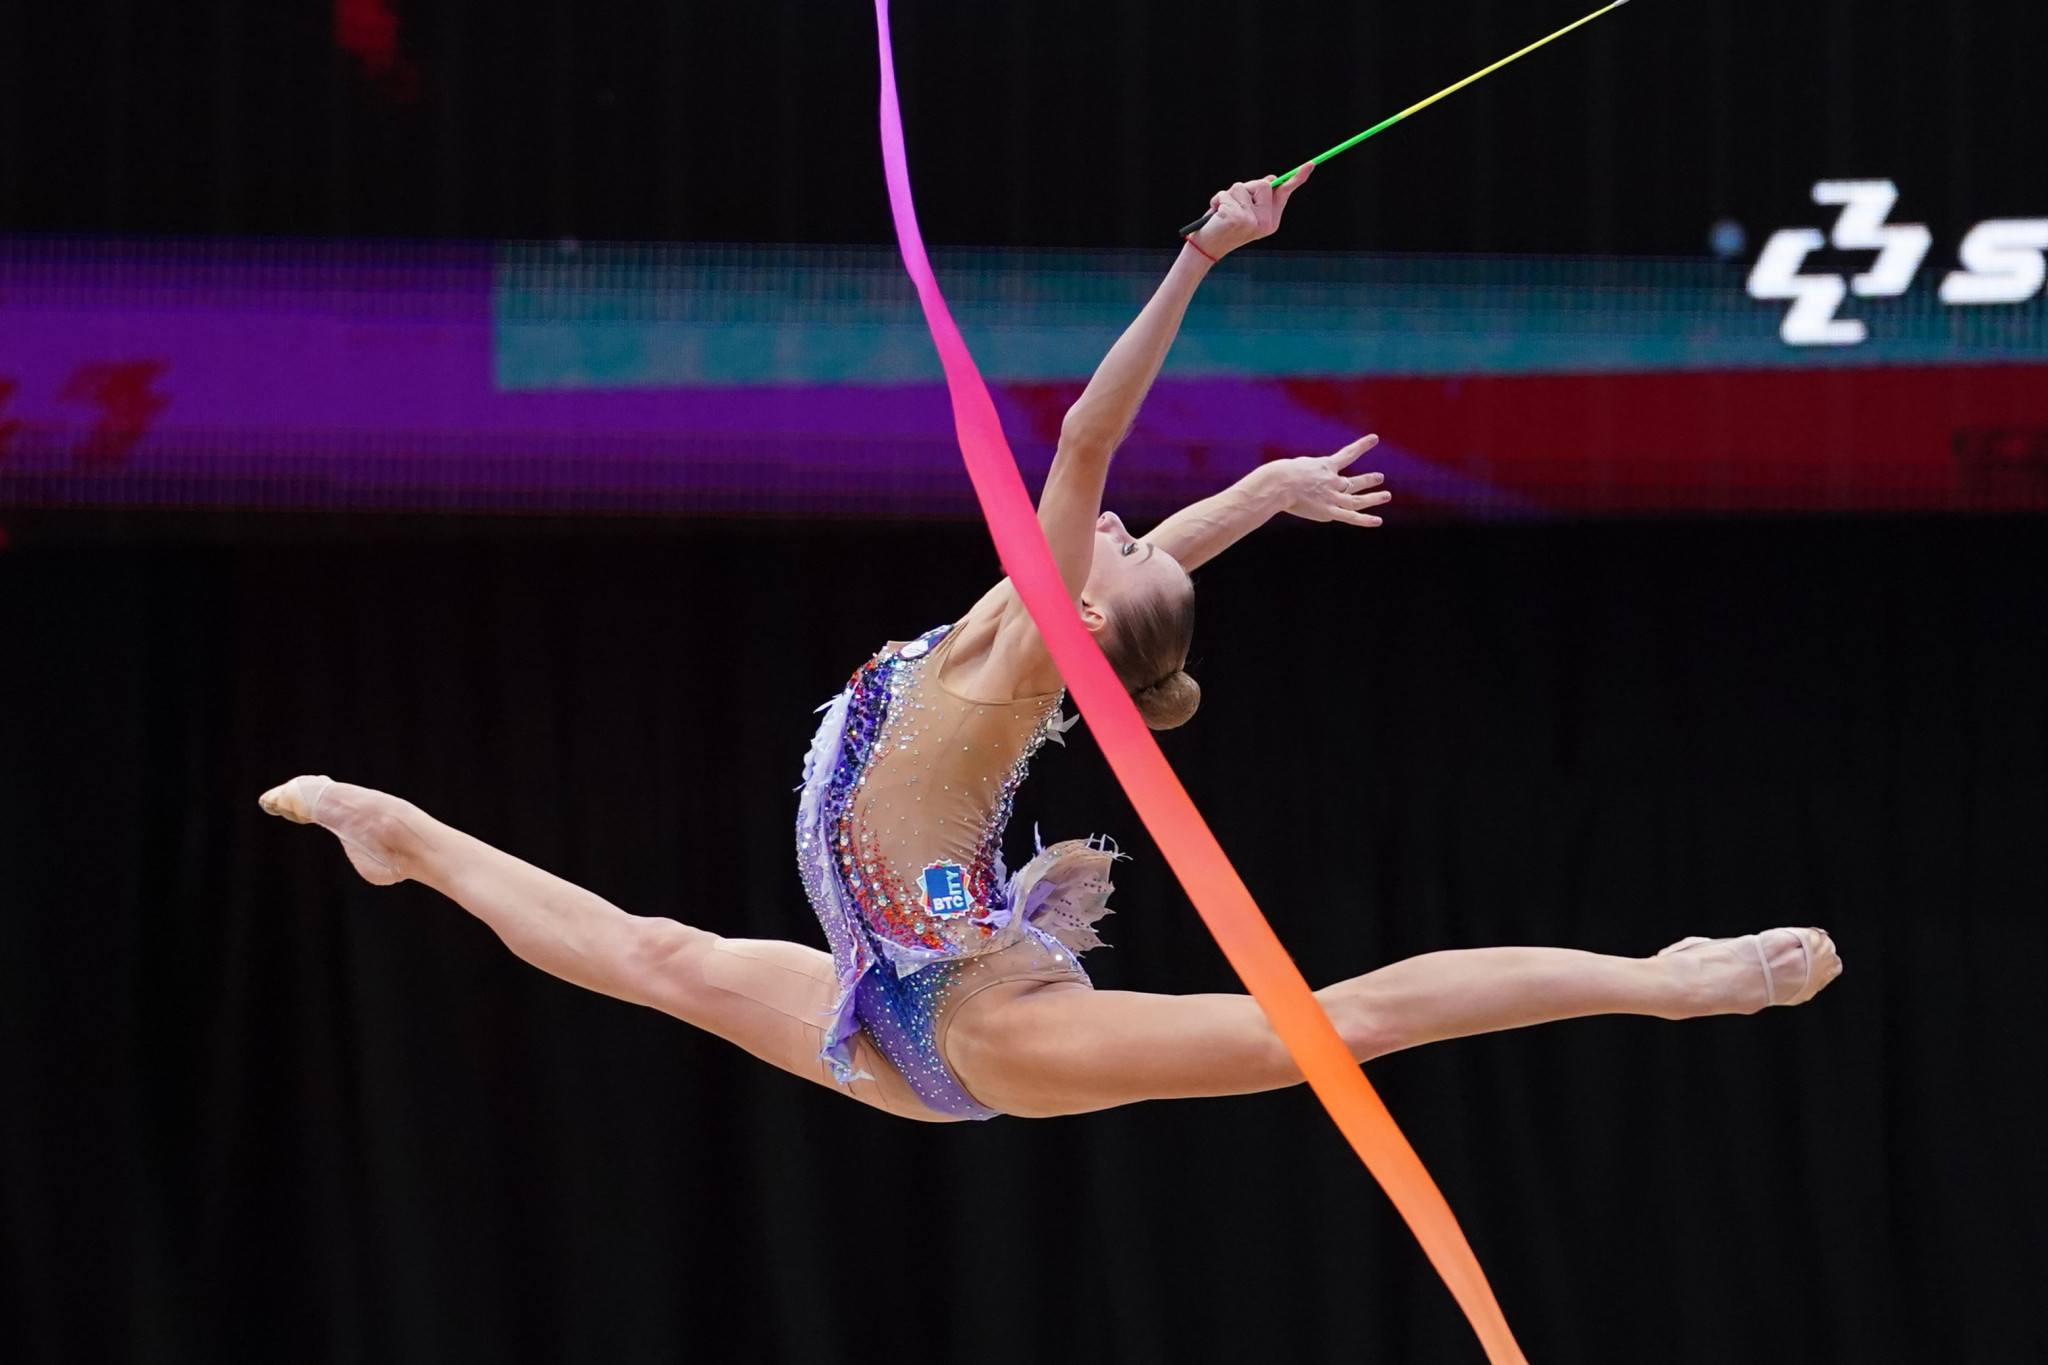 Atamanov and Nikolova continue to impress at European Rhythmic Gymnastics Championships